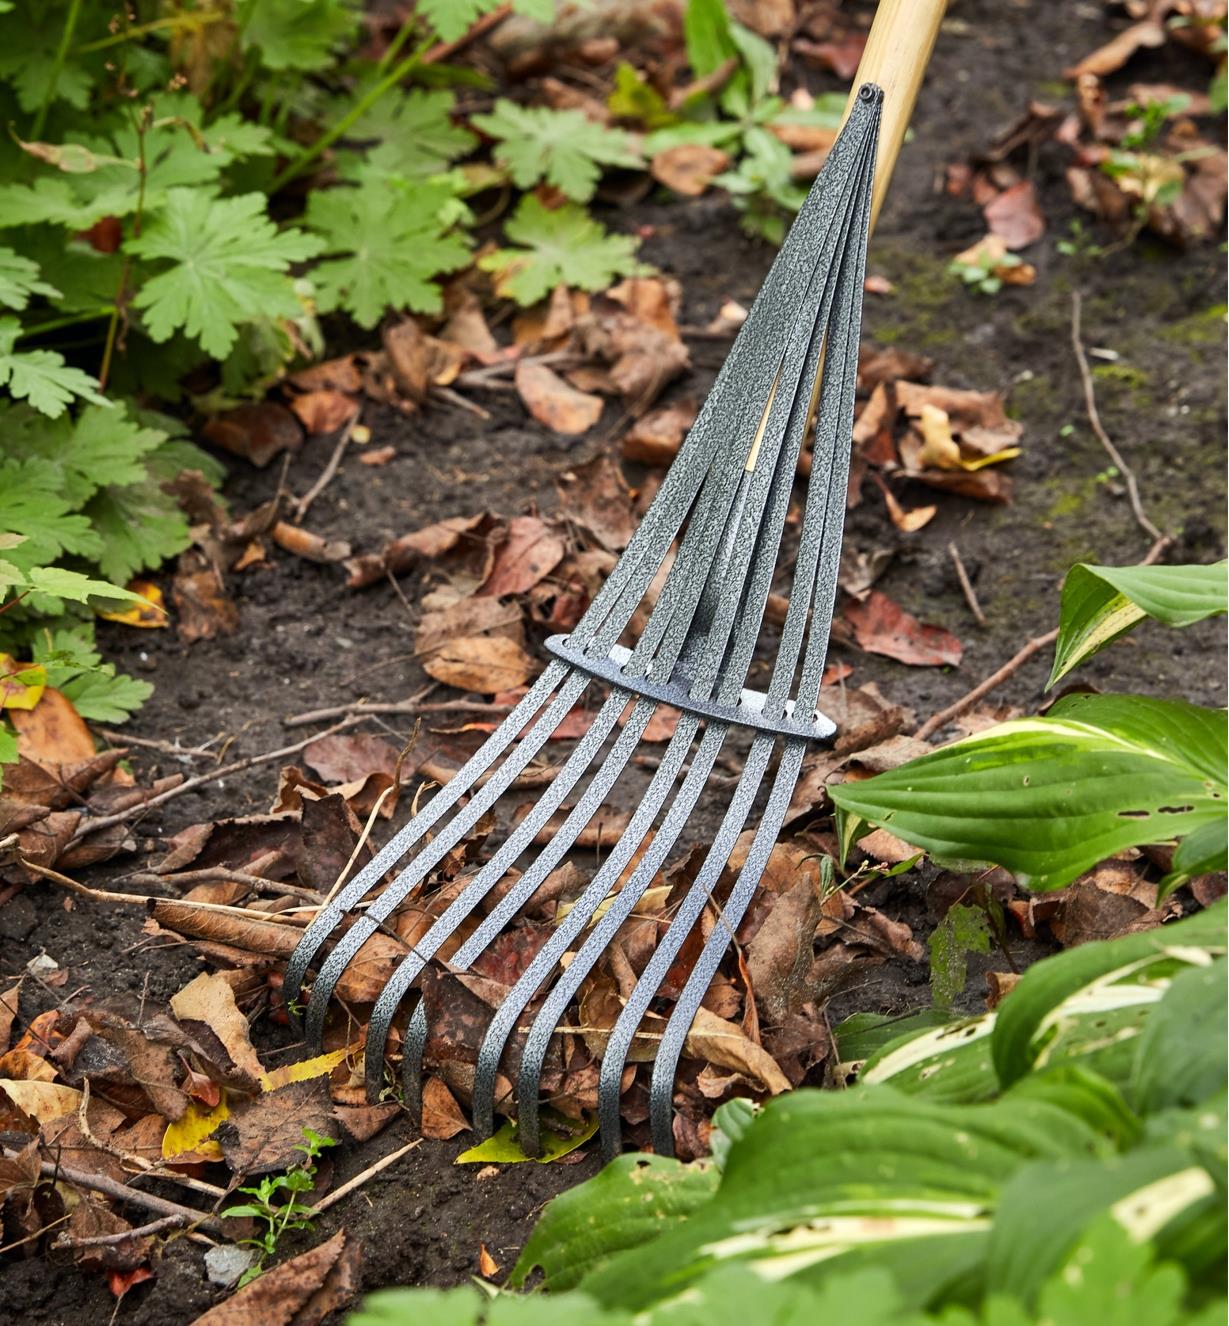 Using the 8-tine flexible rake to rake leaves in a garden